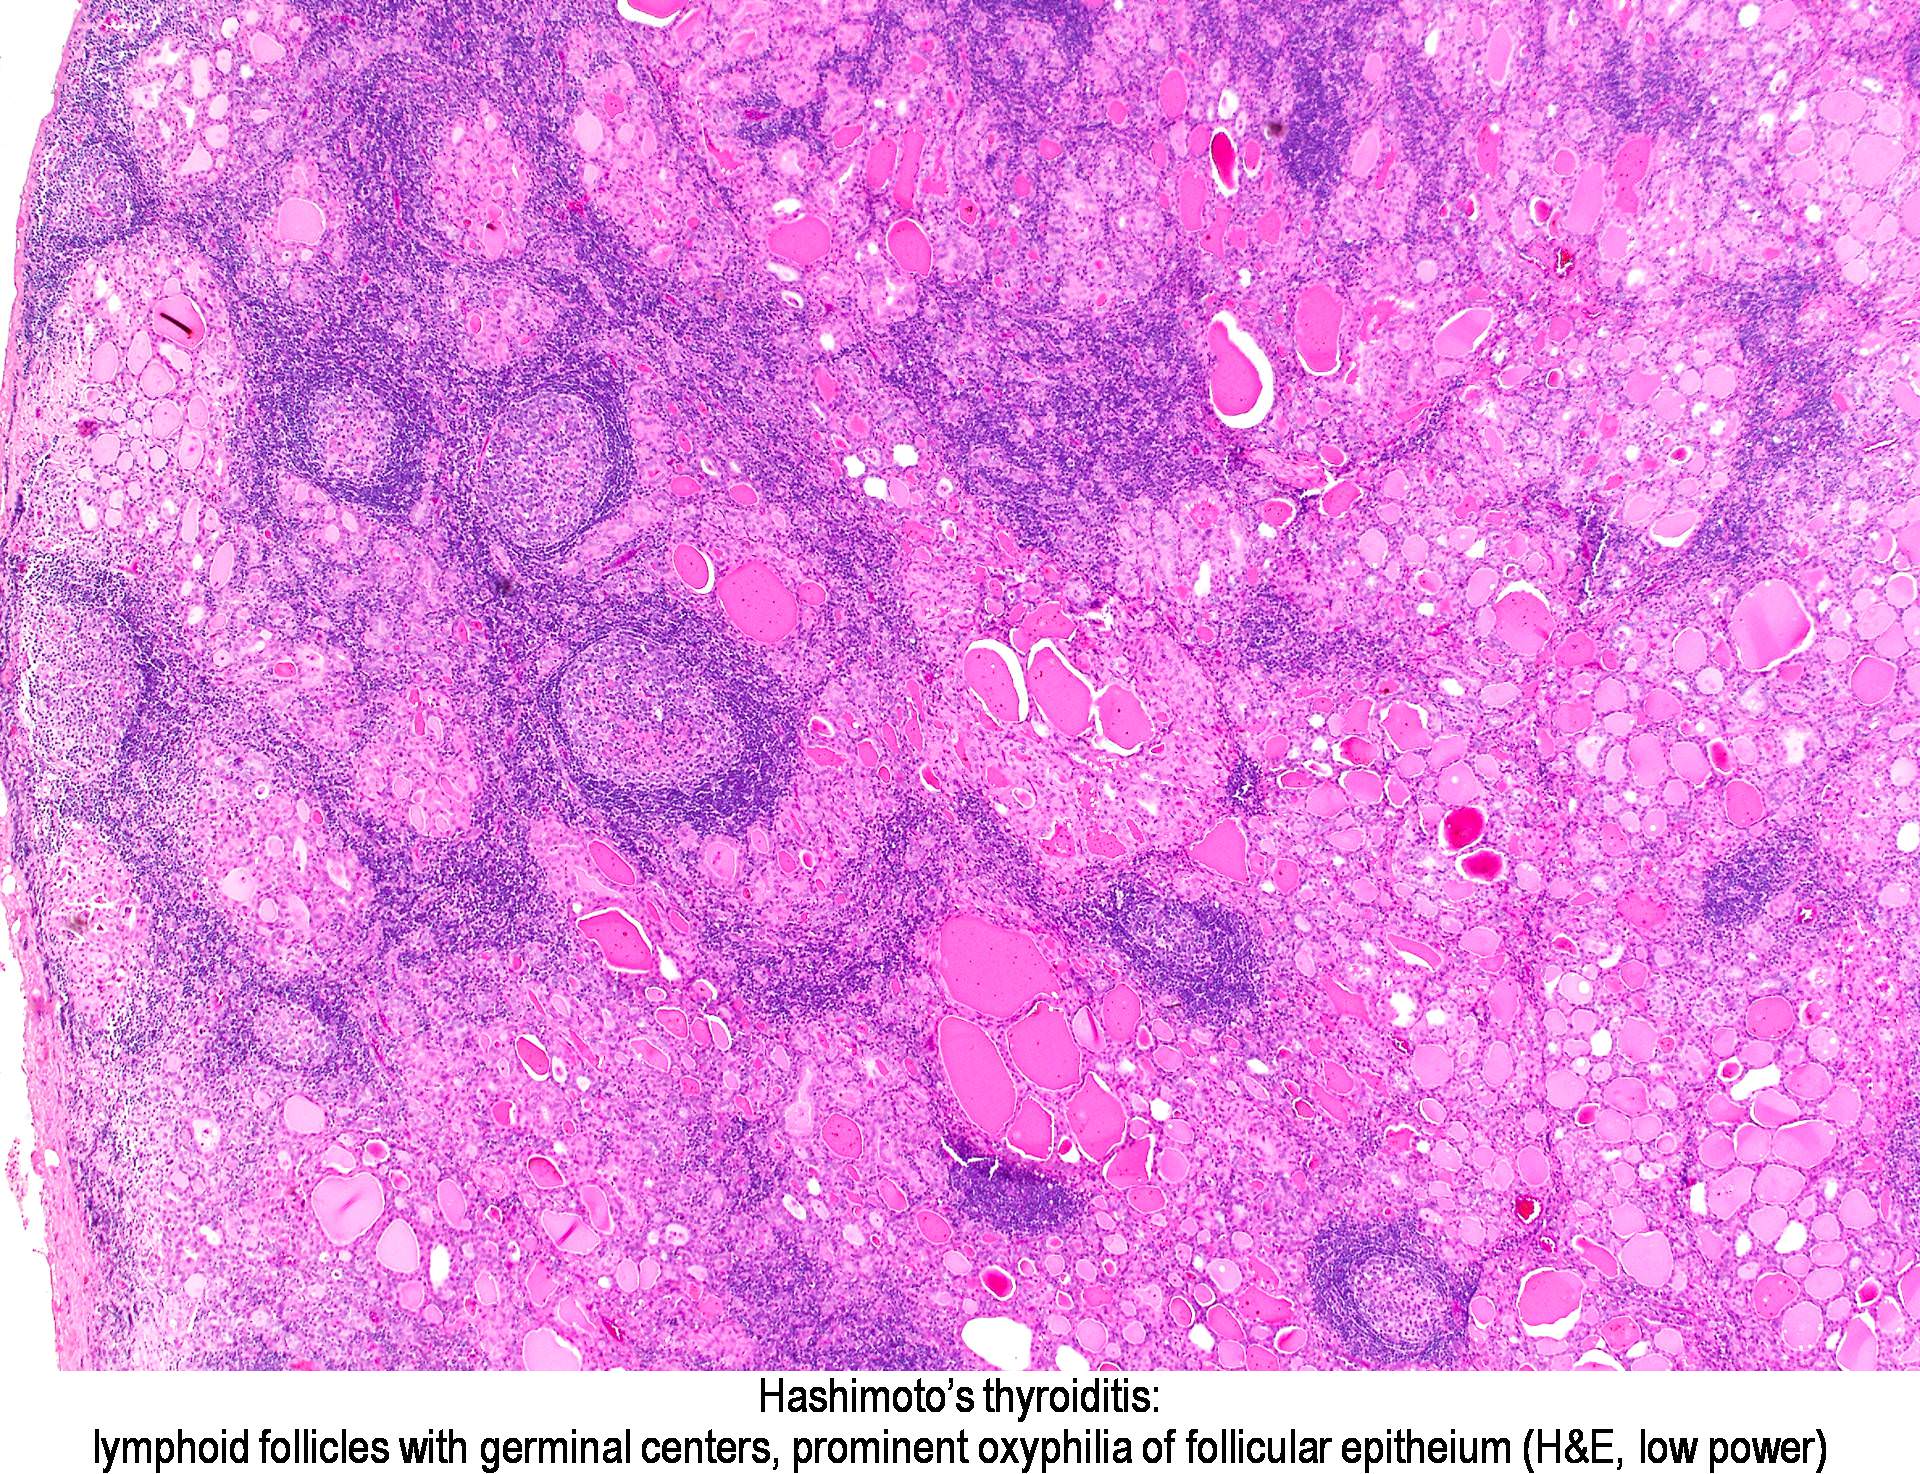 Pathology Outlines - Hashimoto thyroiditis